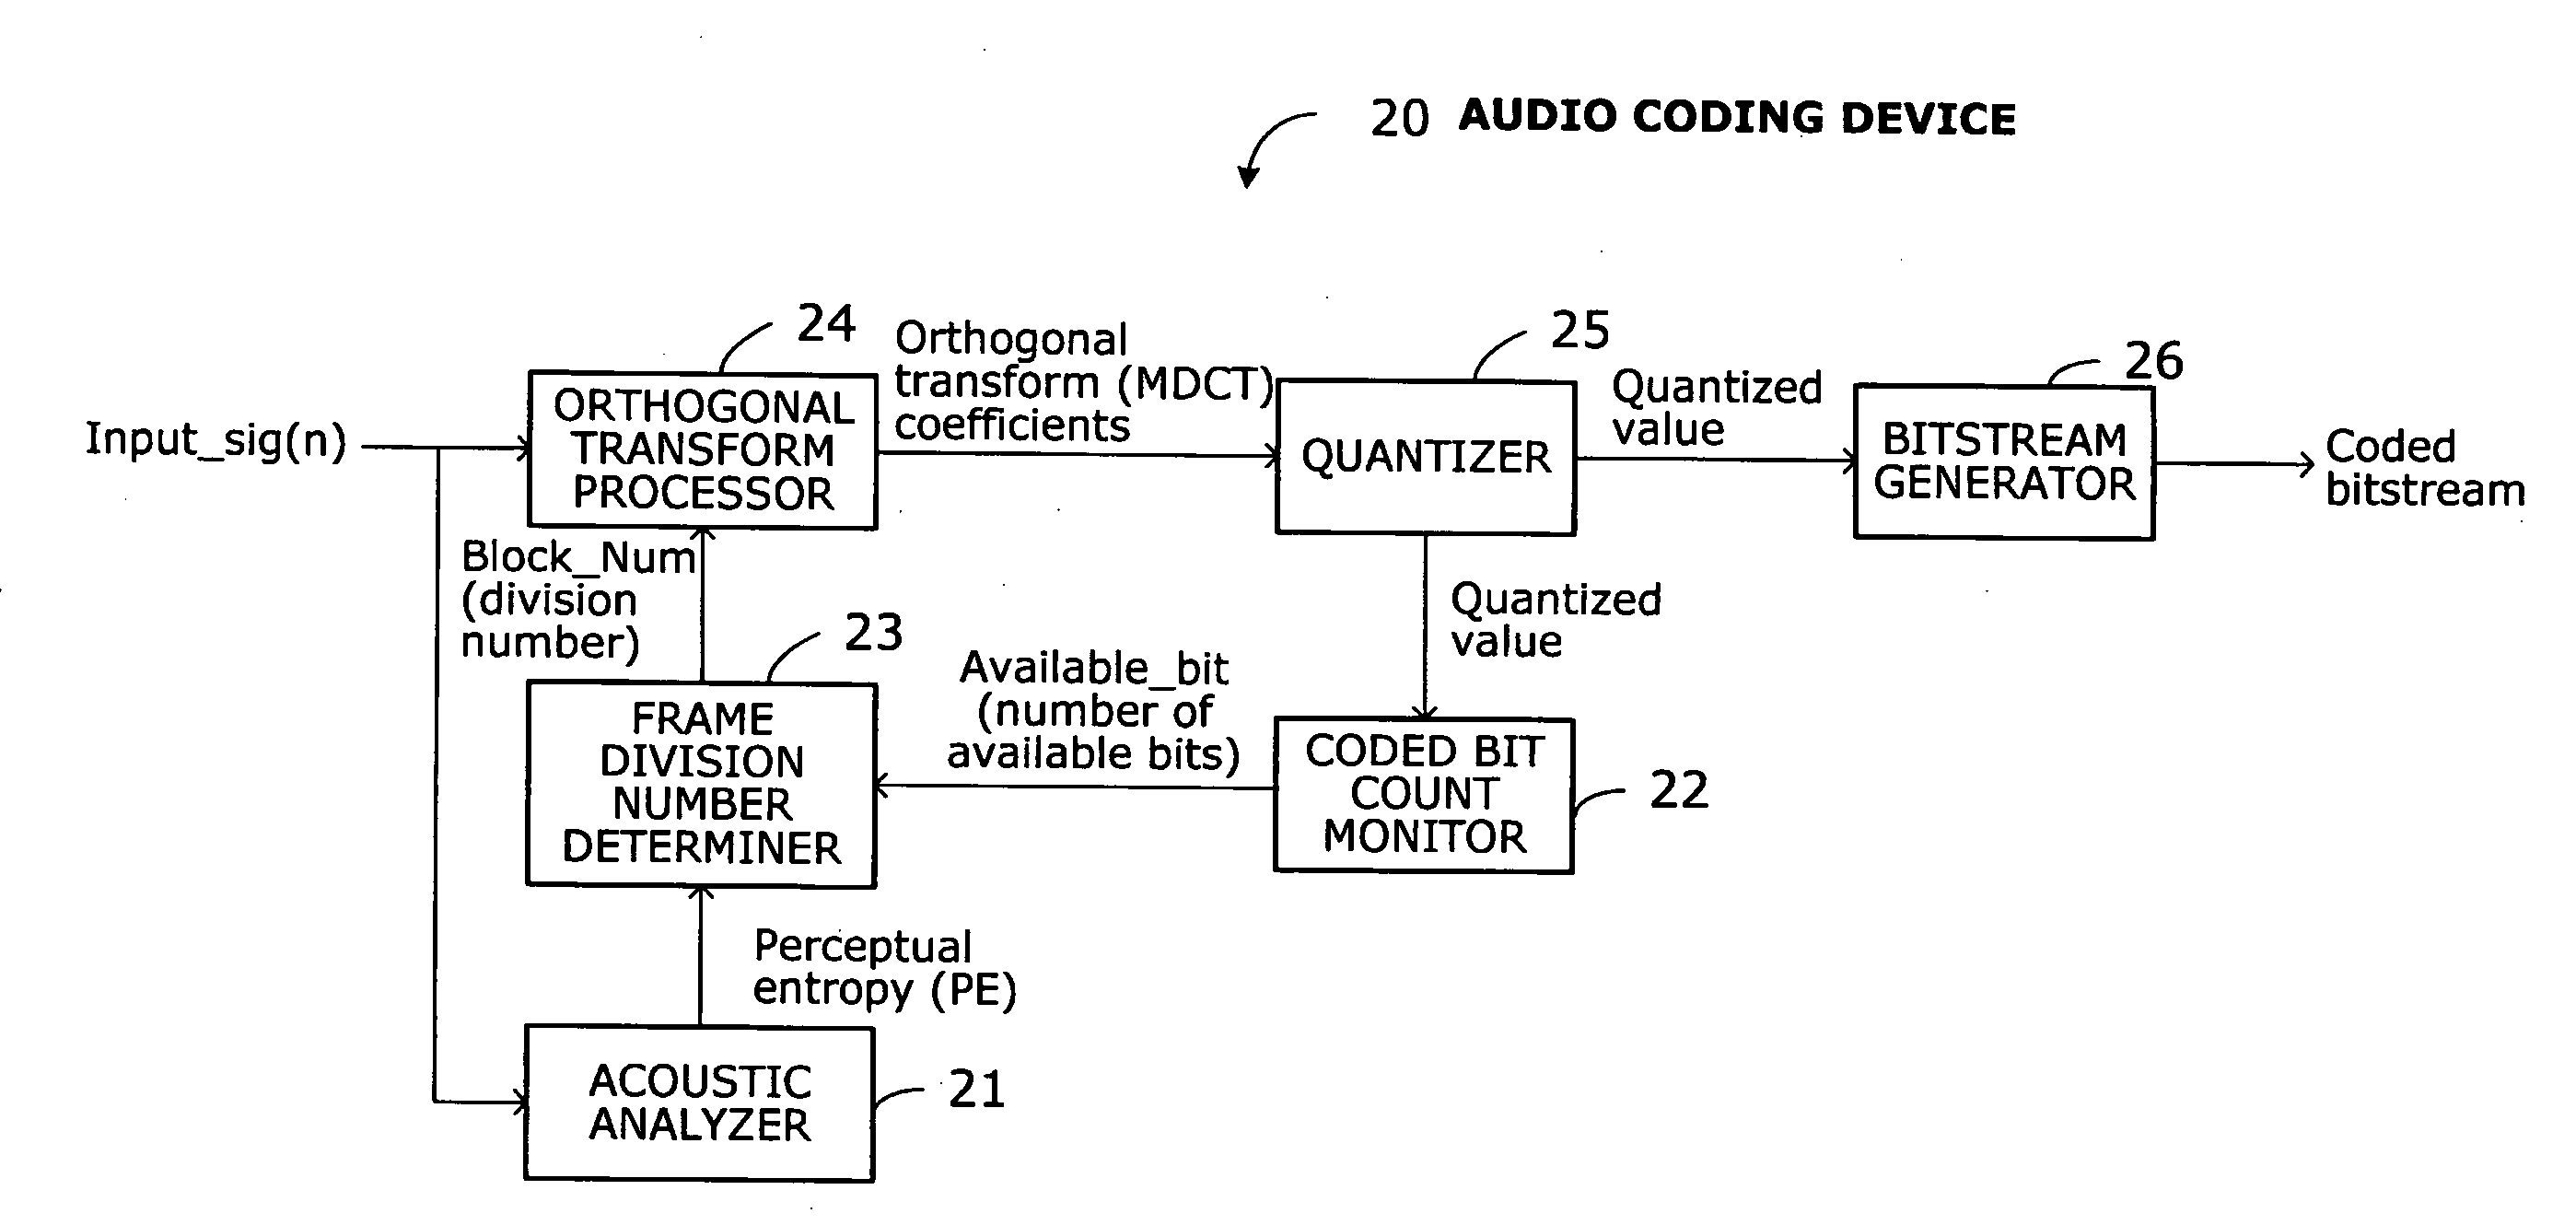 Apparatus and method for encoding audio signals